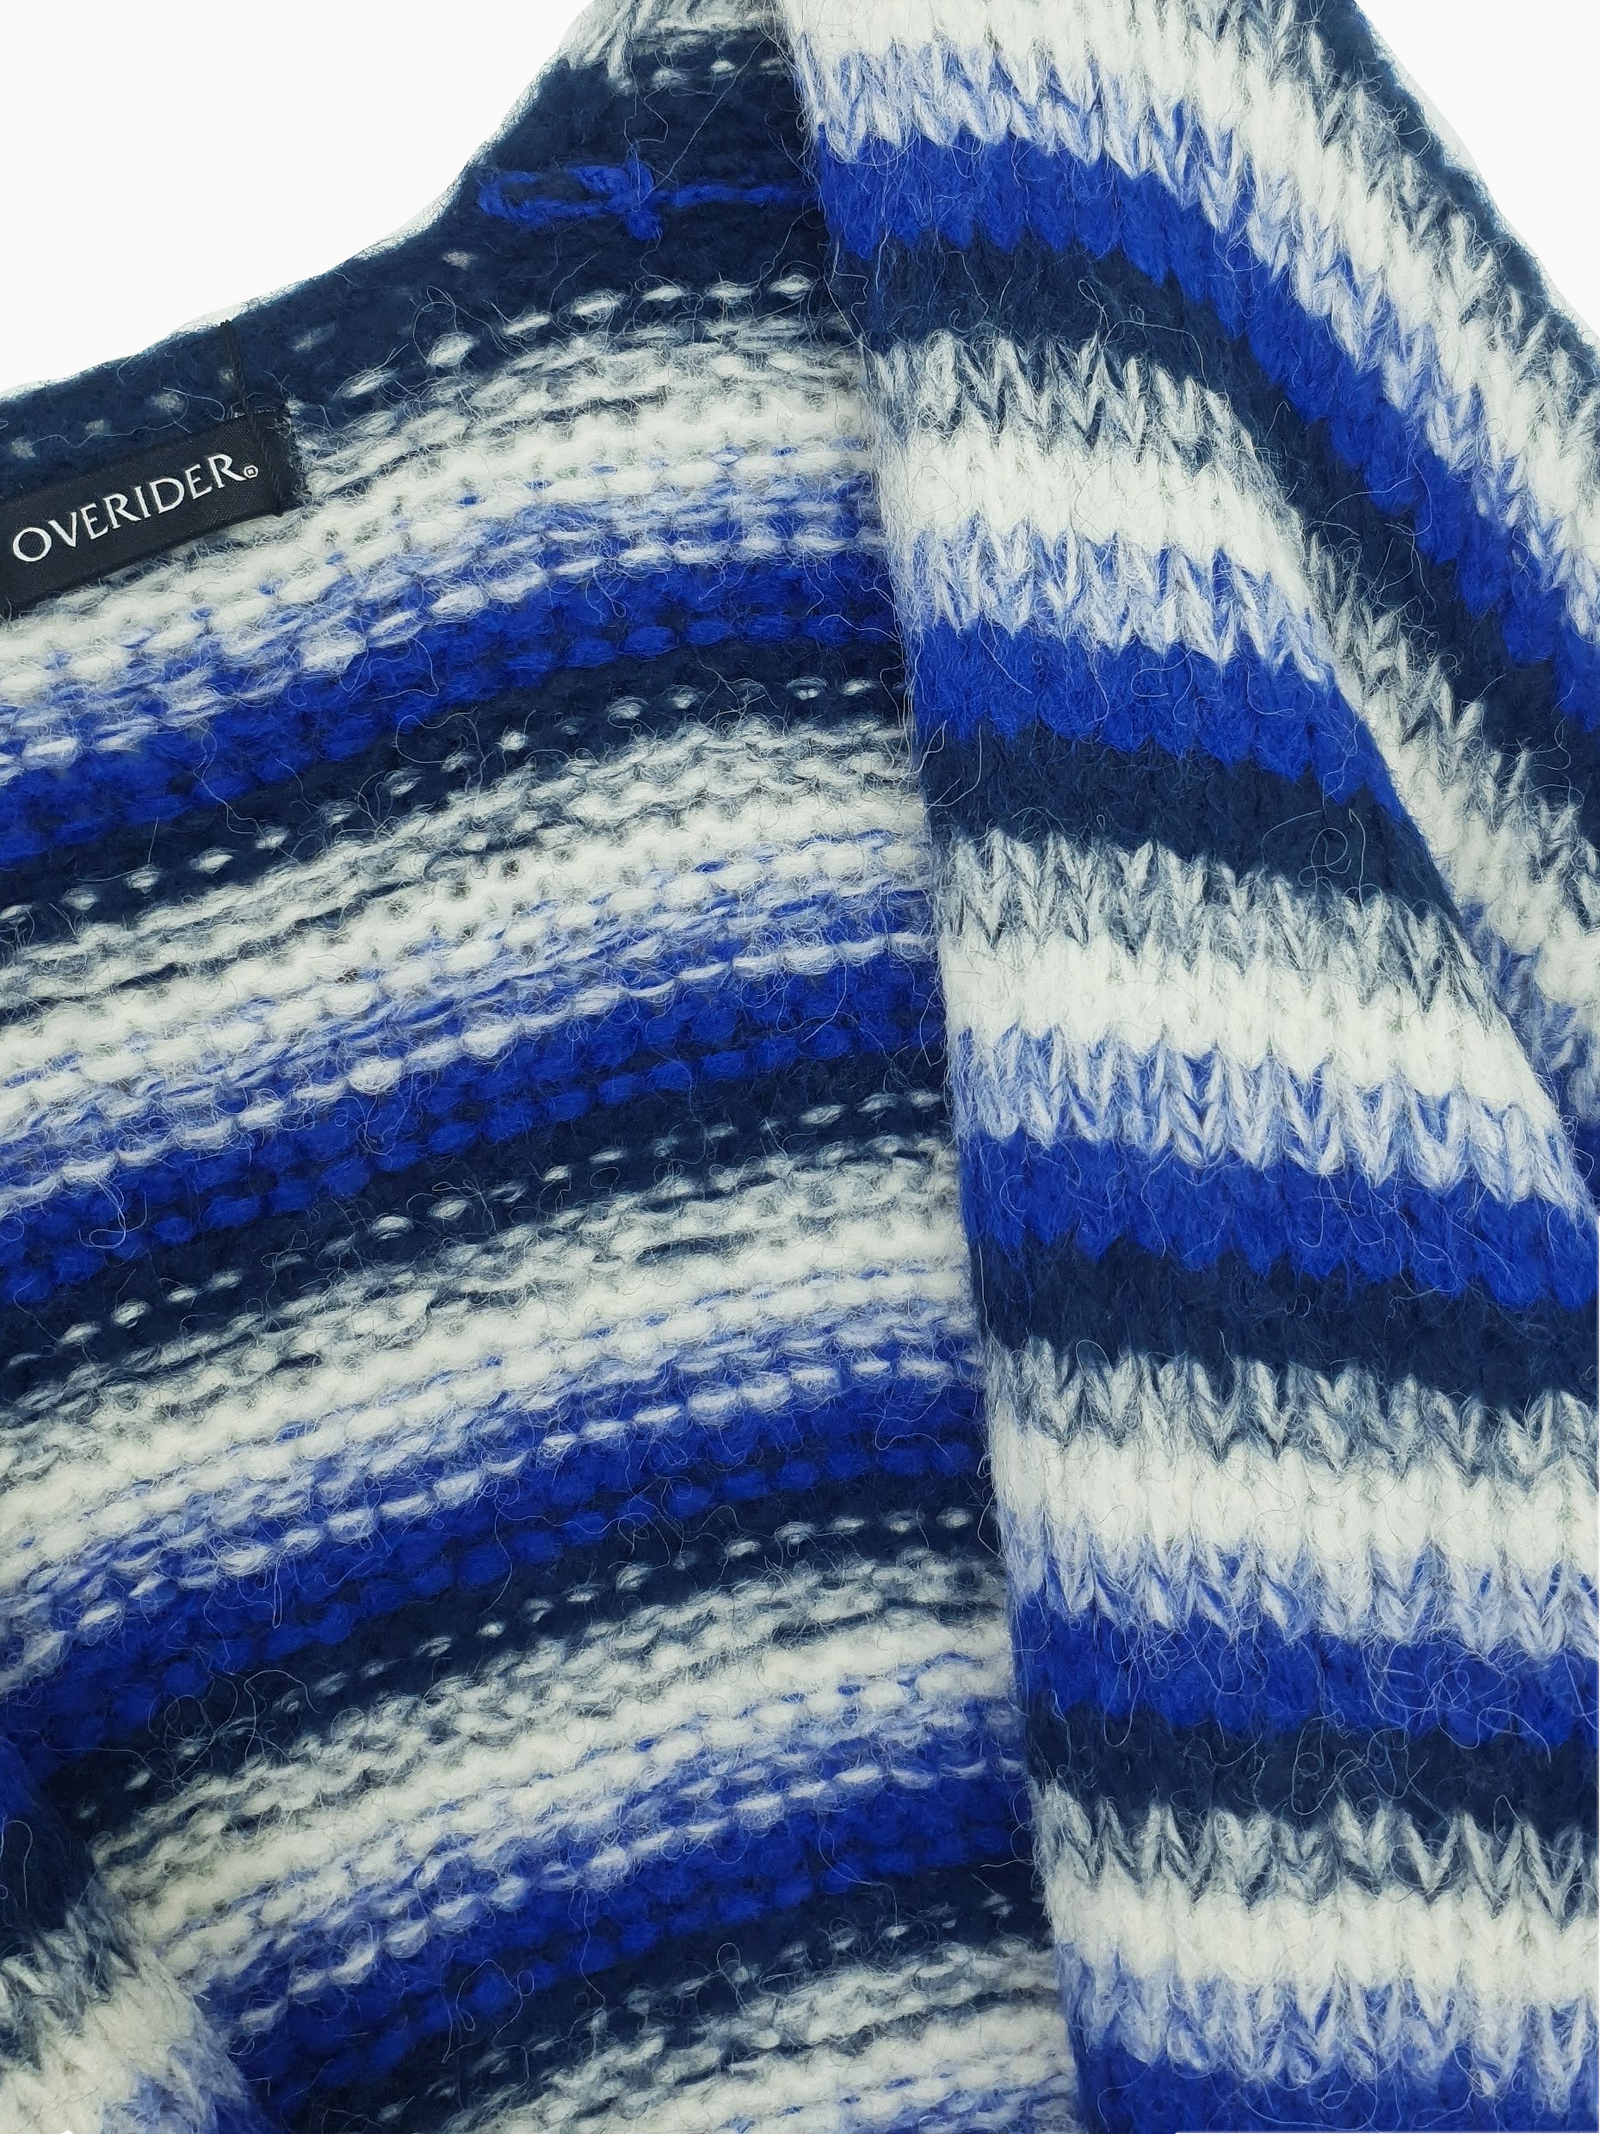 LEILA | Striped Knitted Open Cardi | Blue